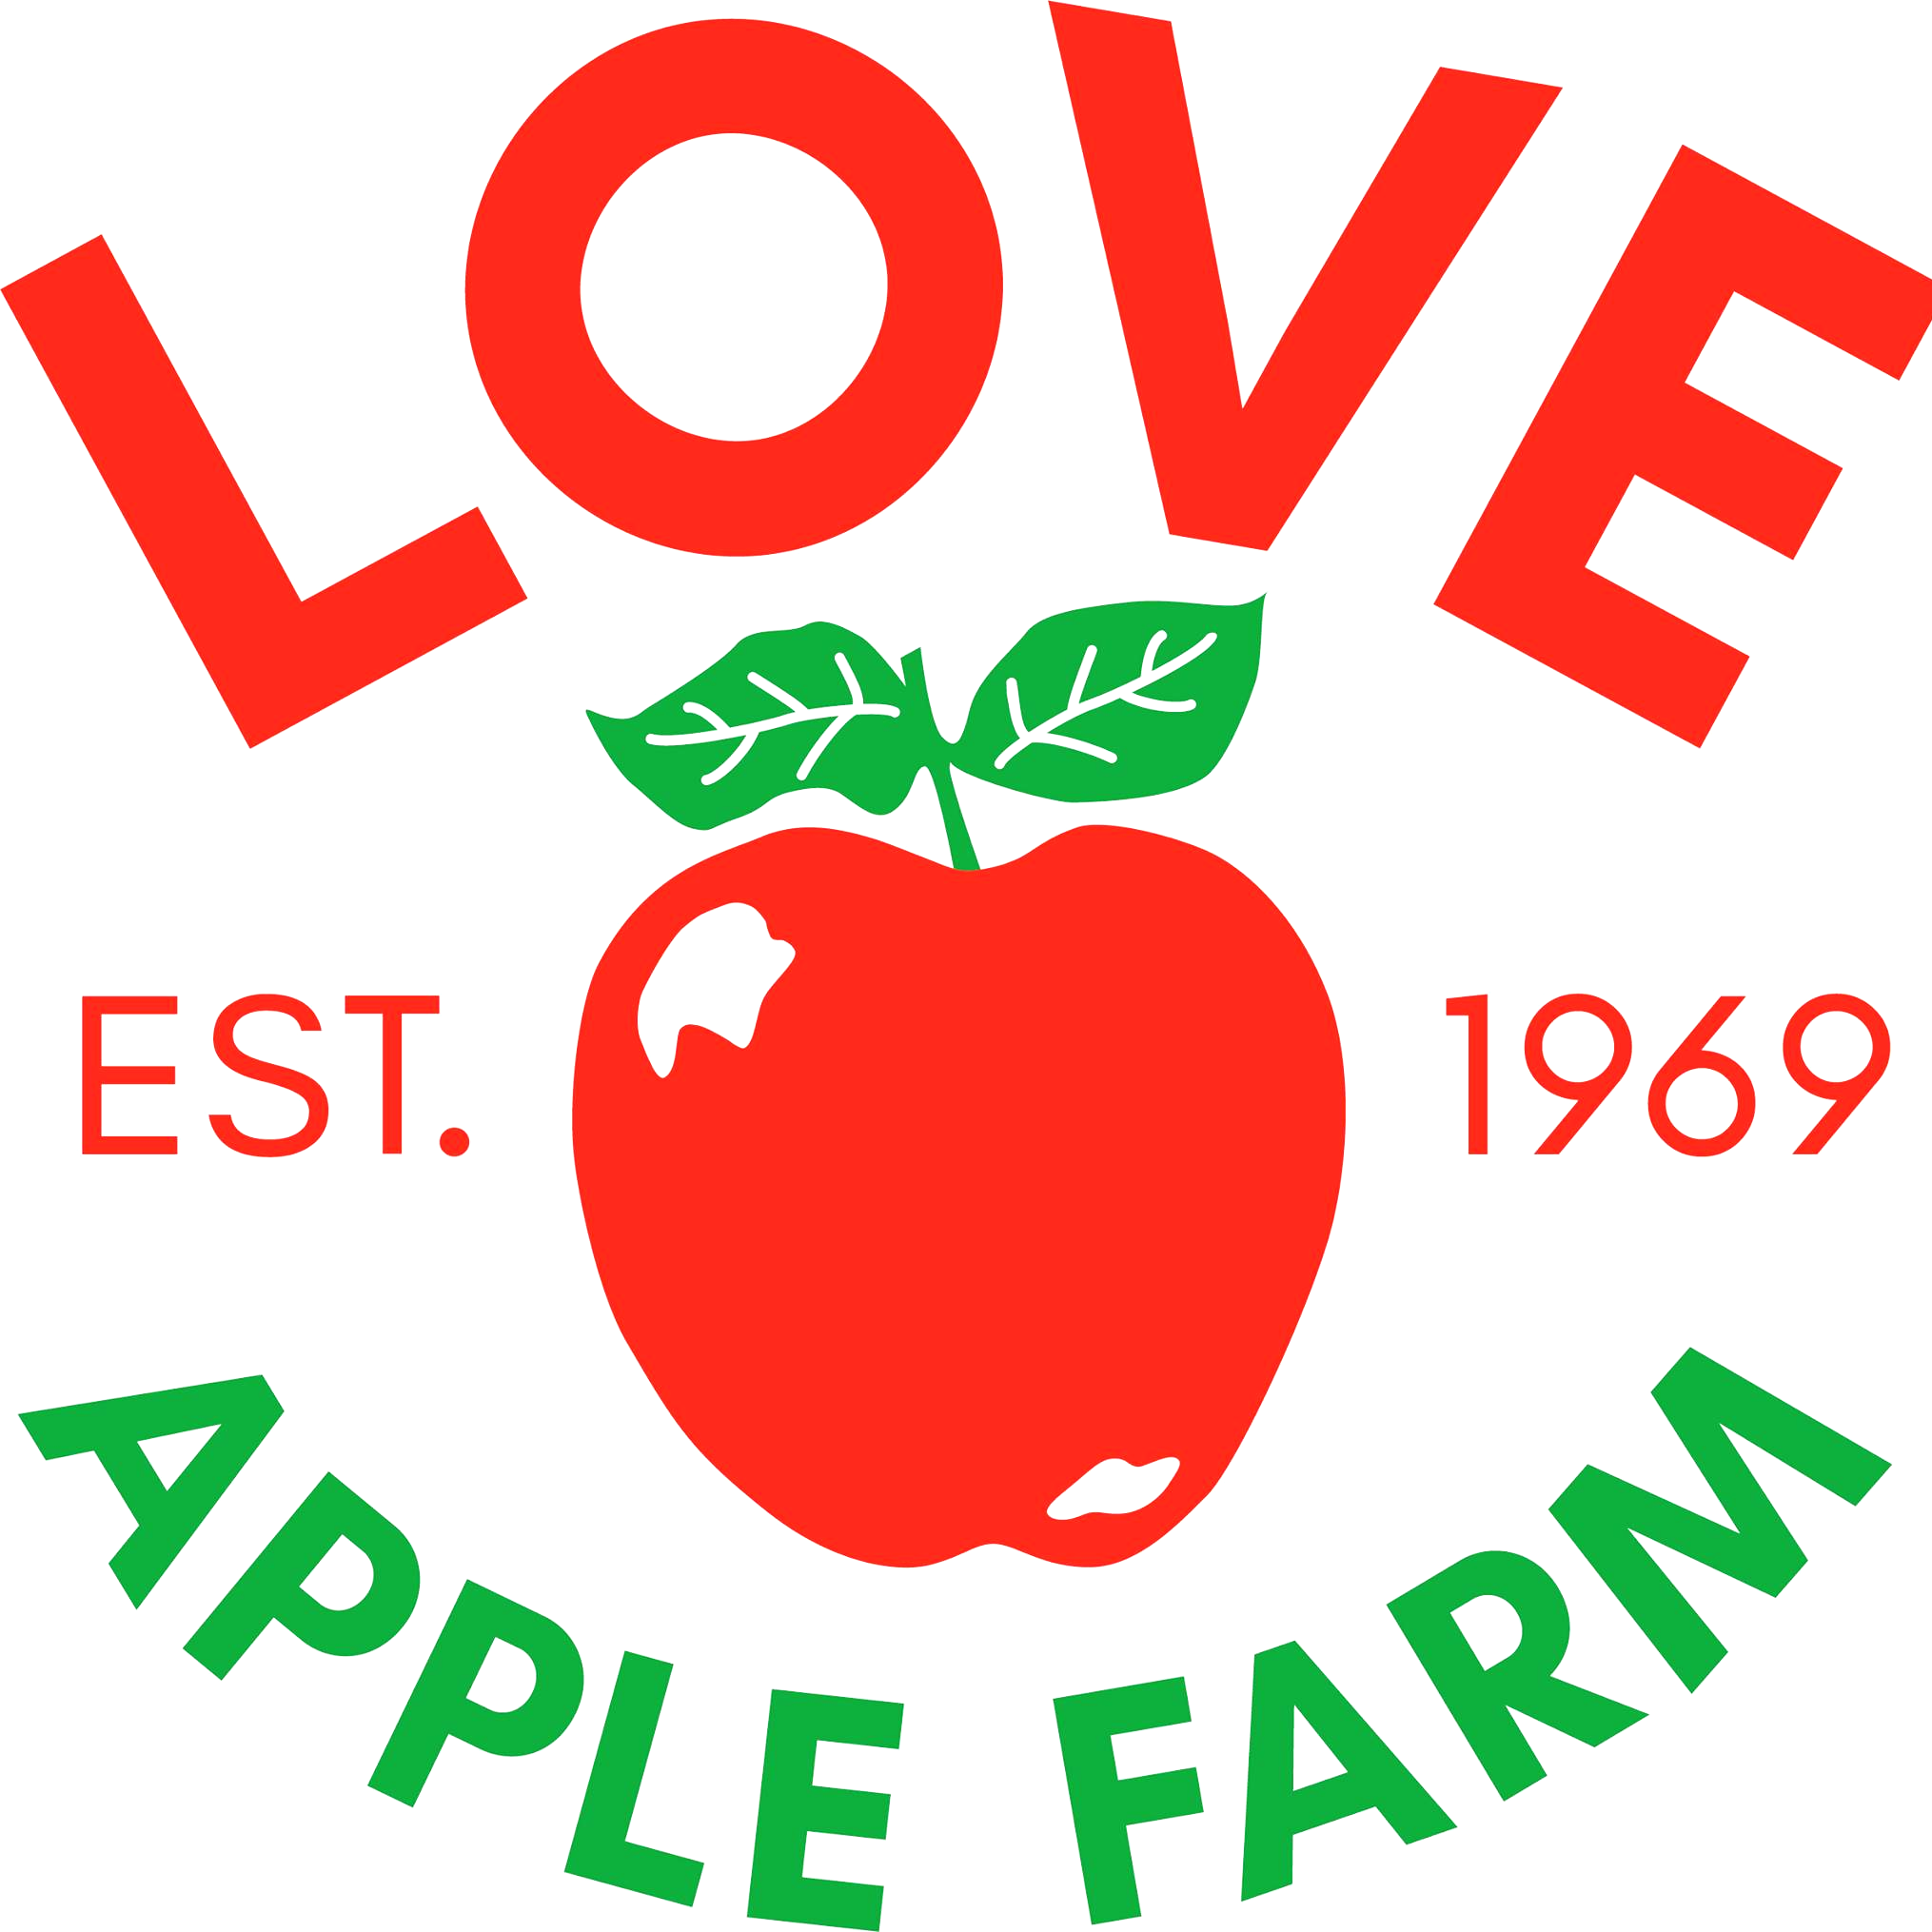 Love Apple Farm